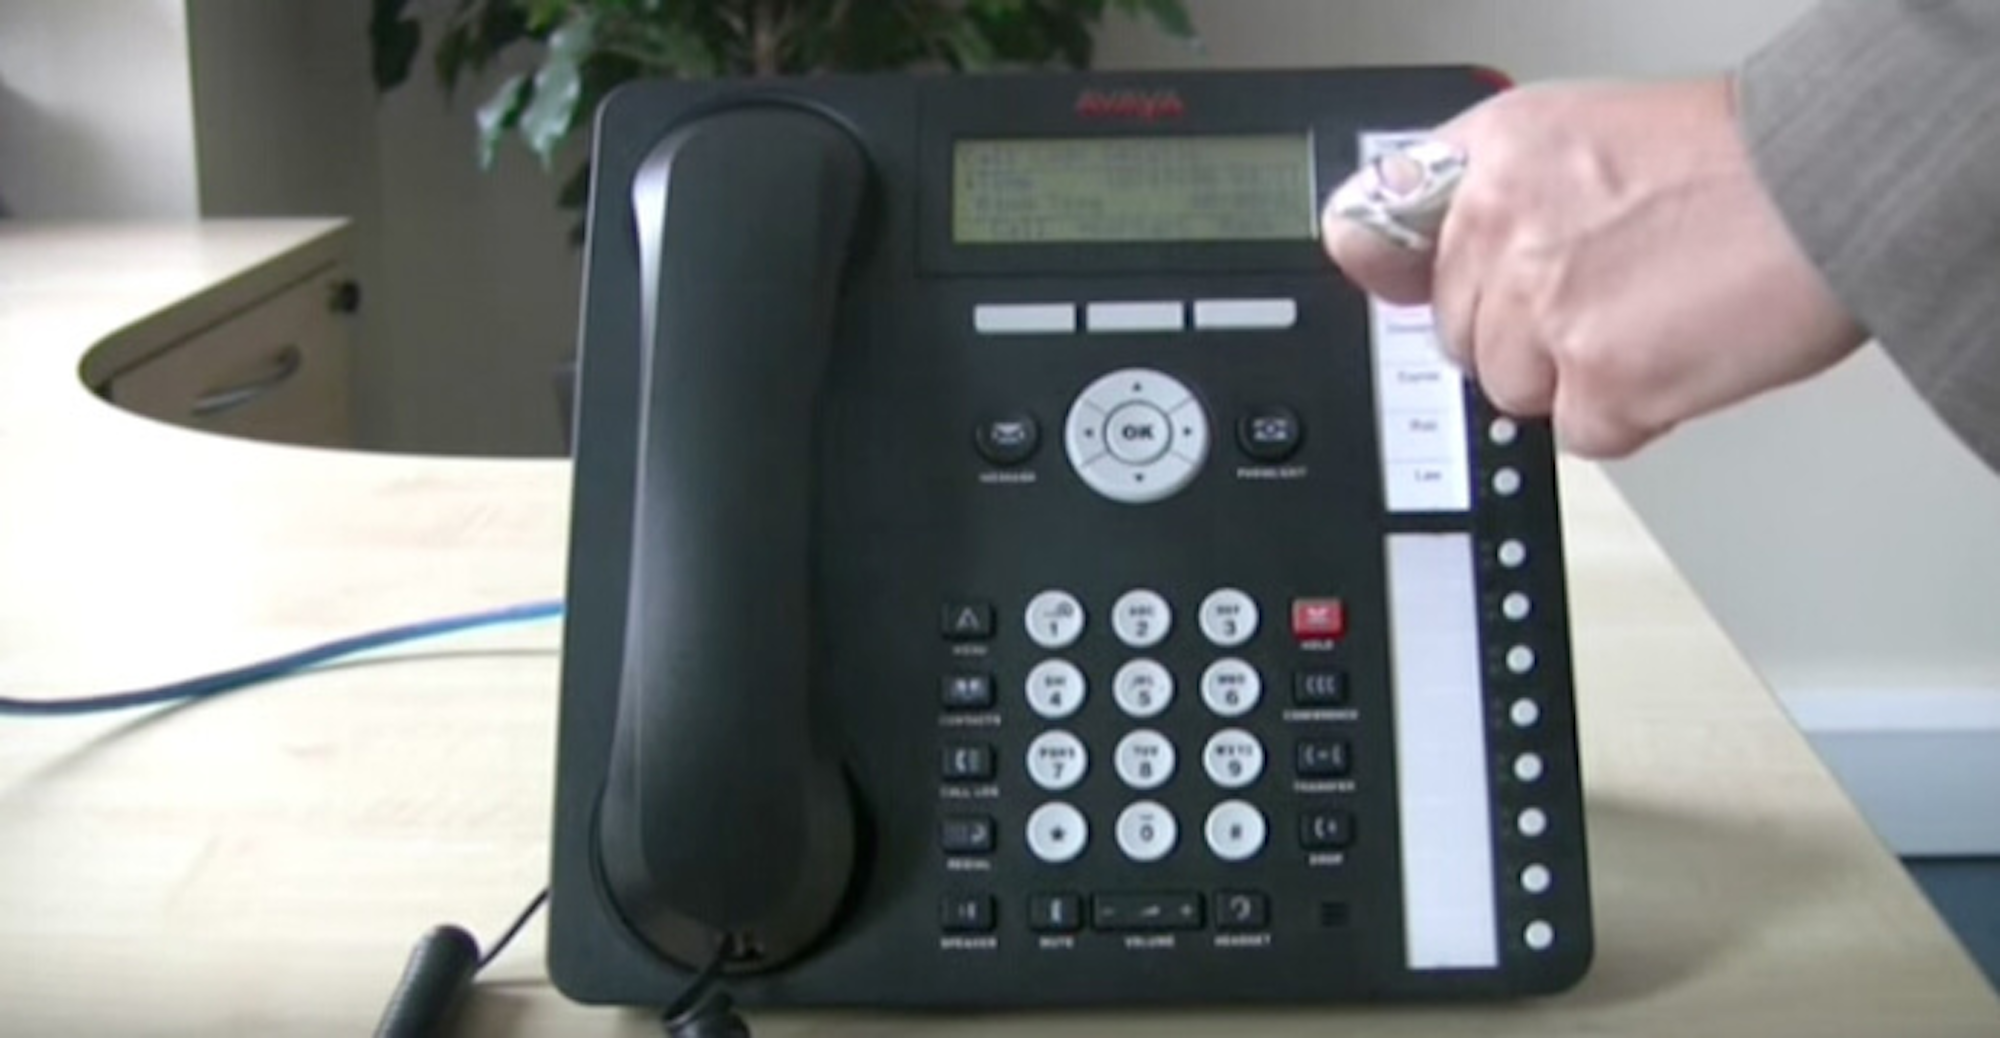 Britannic: Using call log Avaya IP Office 1616 series phone